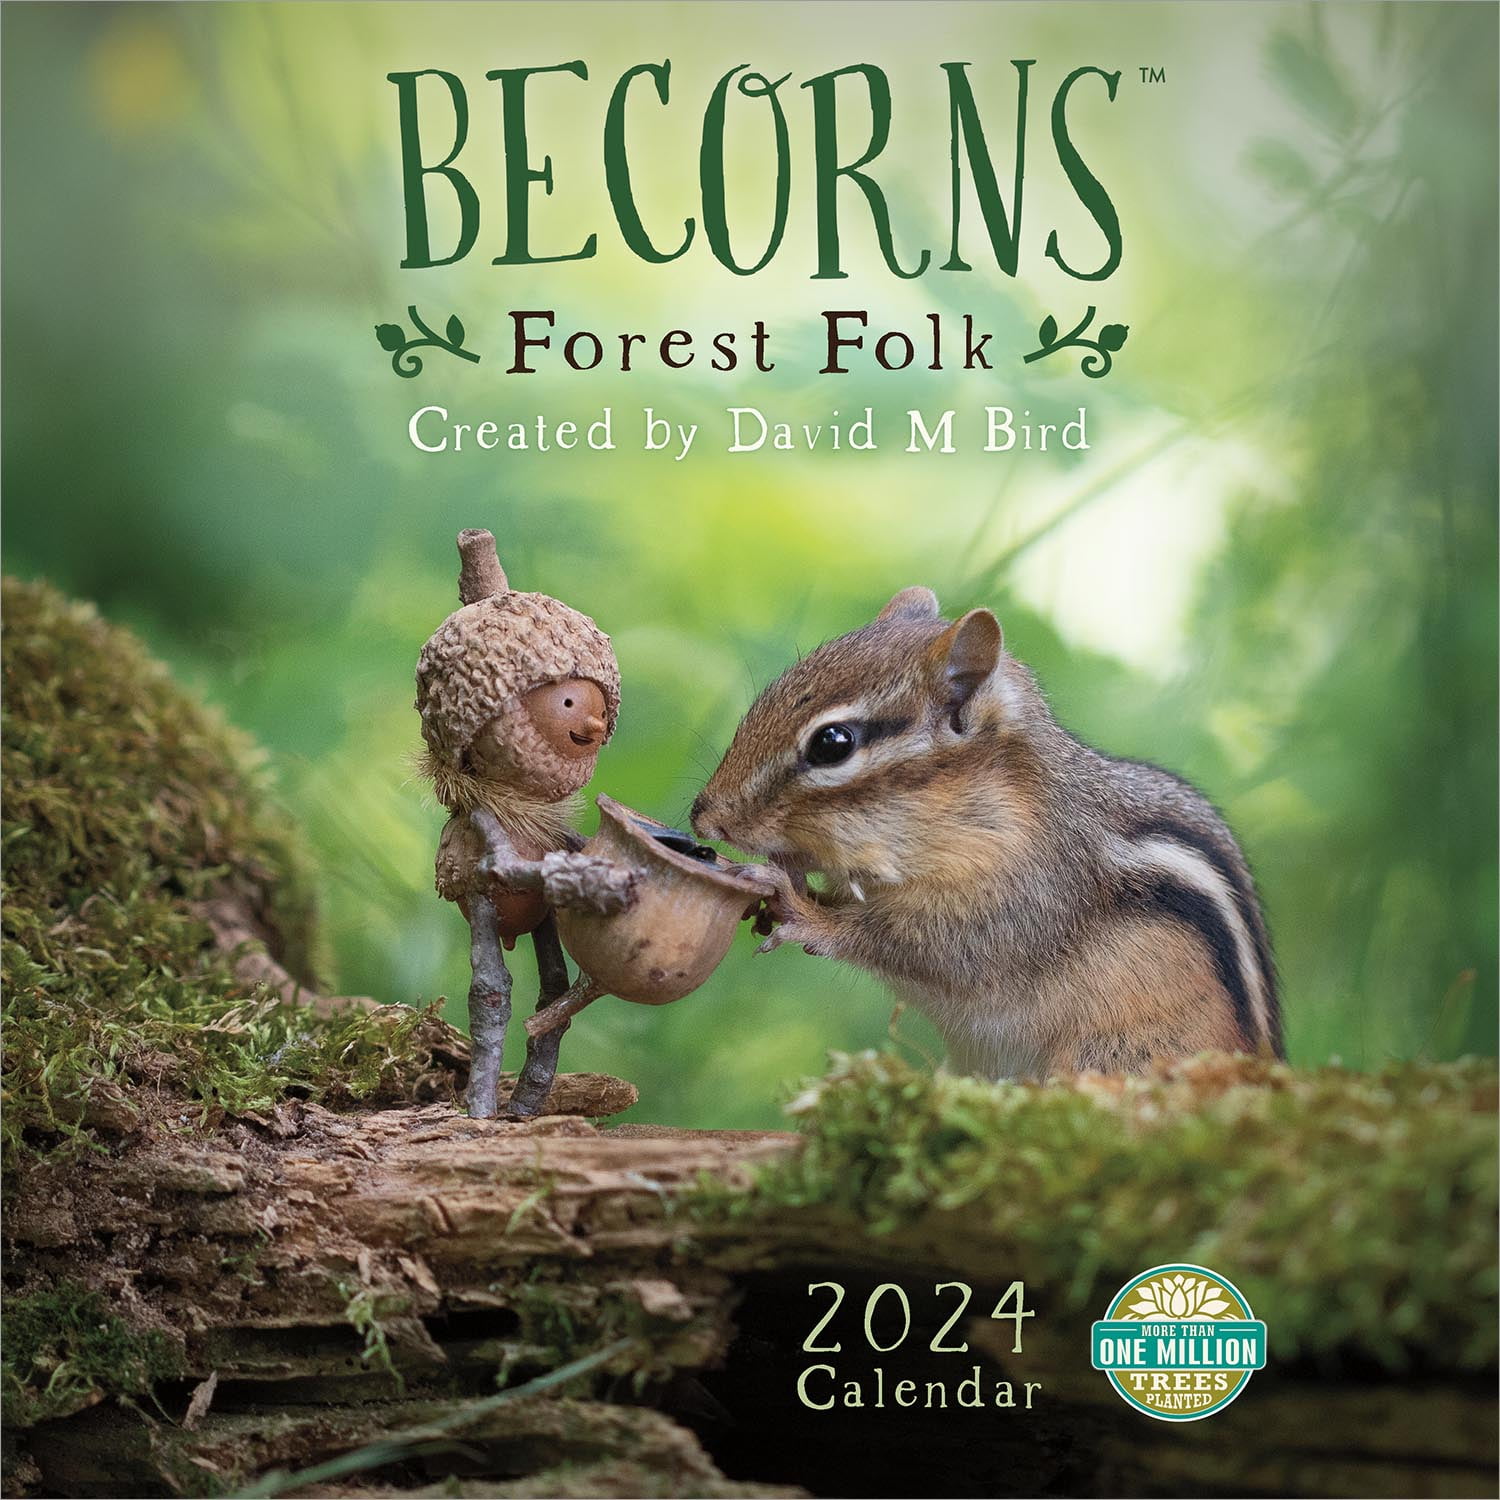 Becorns Forest Folk 2025 Calendar